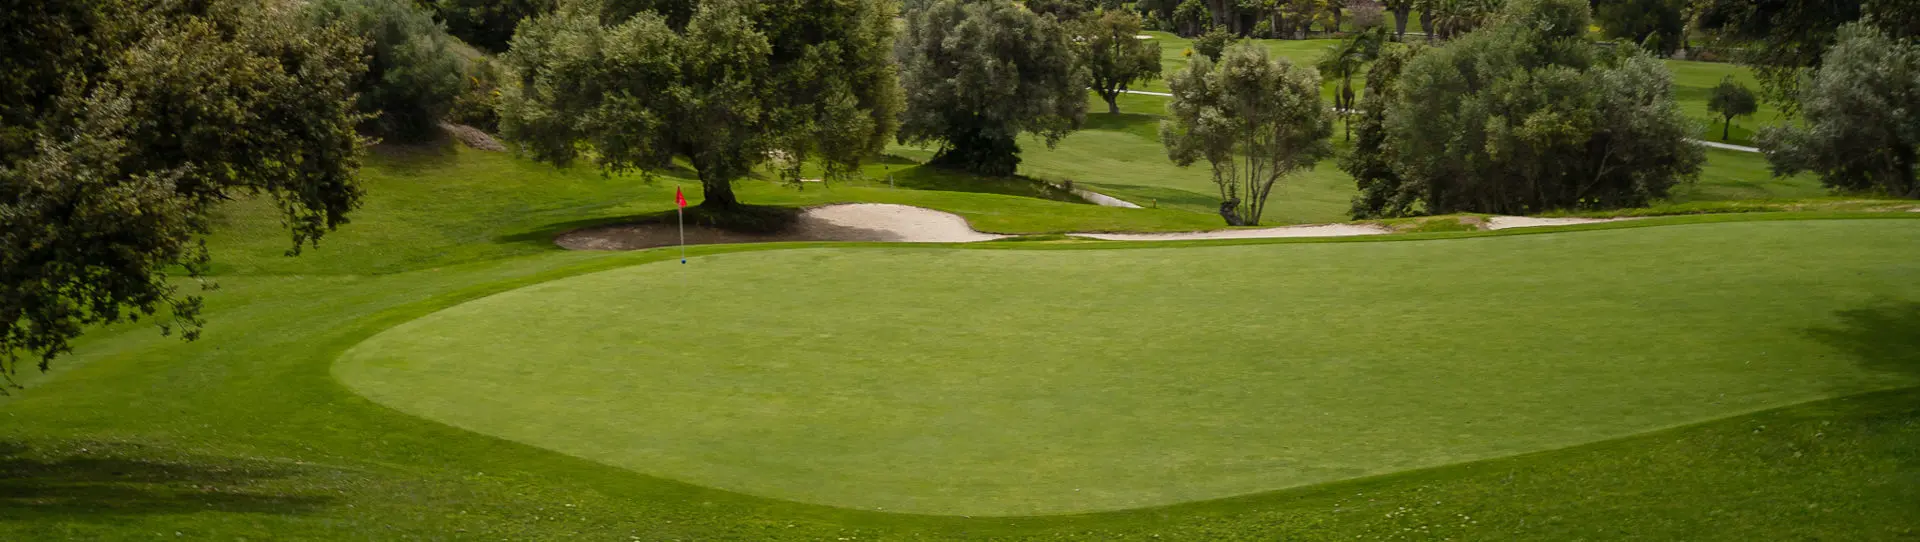 Spain golf courses - Santa Clara Marbella - Photo 3